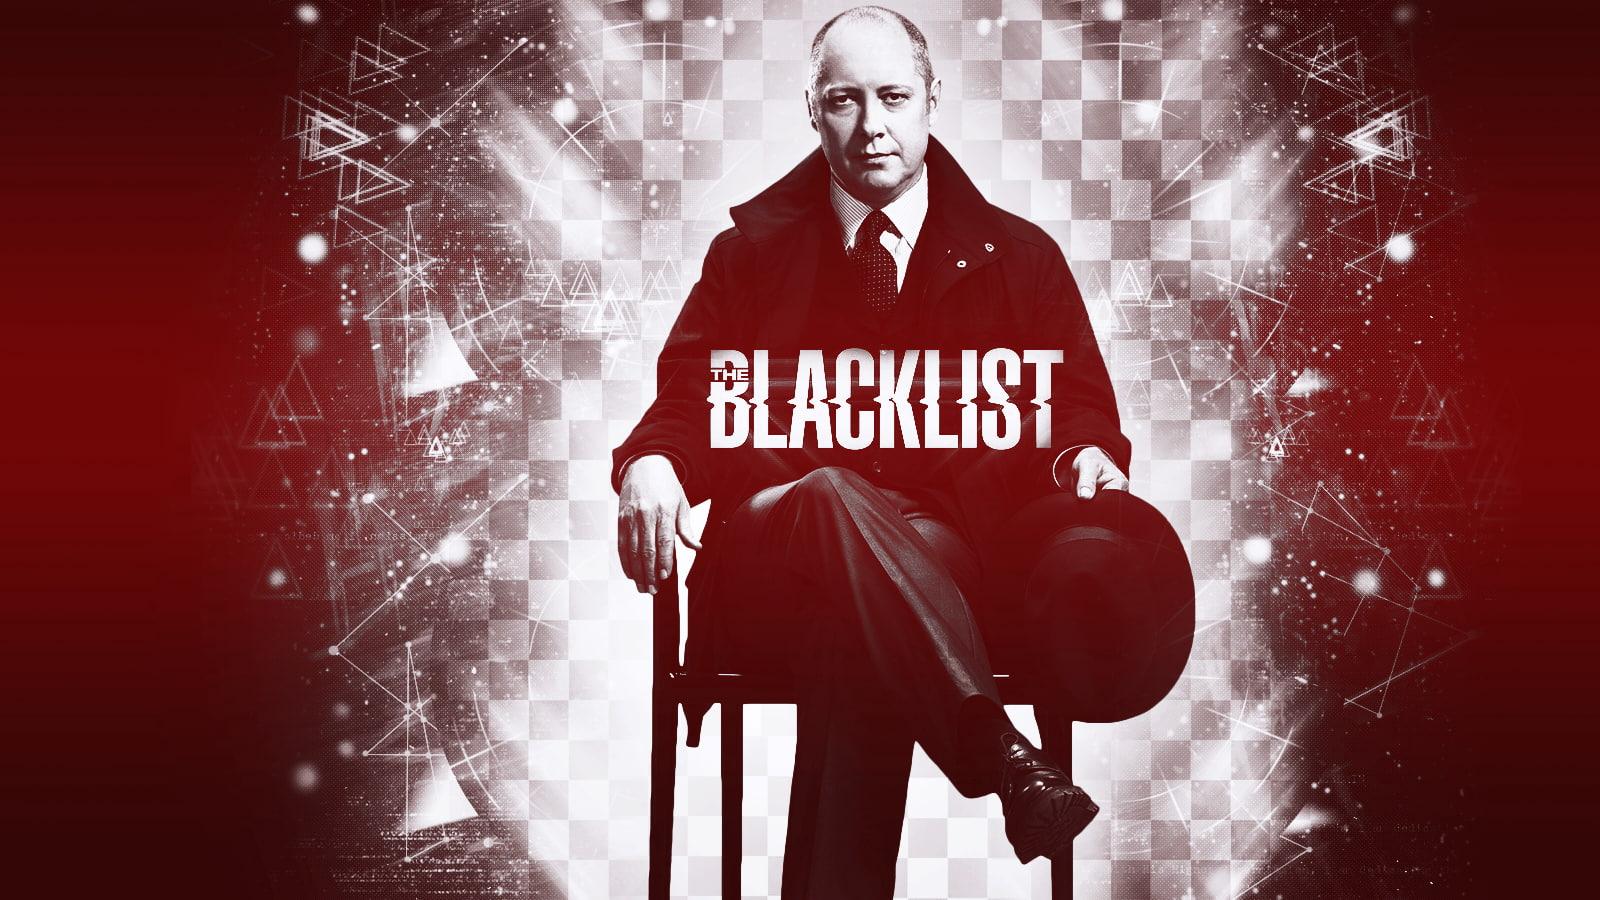 HD wallpaper: The Blacklist, Raymond Reddington, one person, indoors